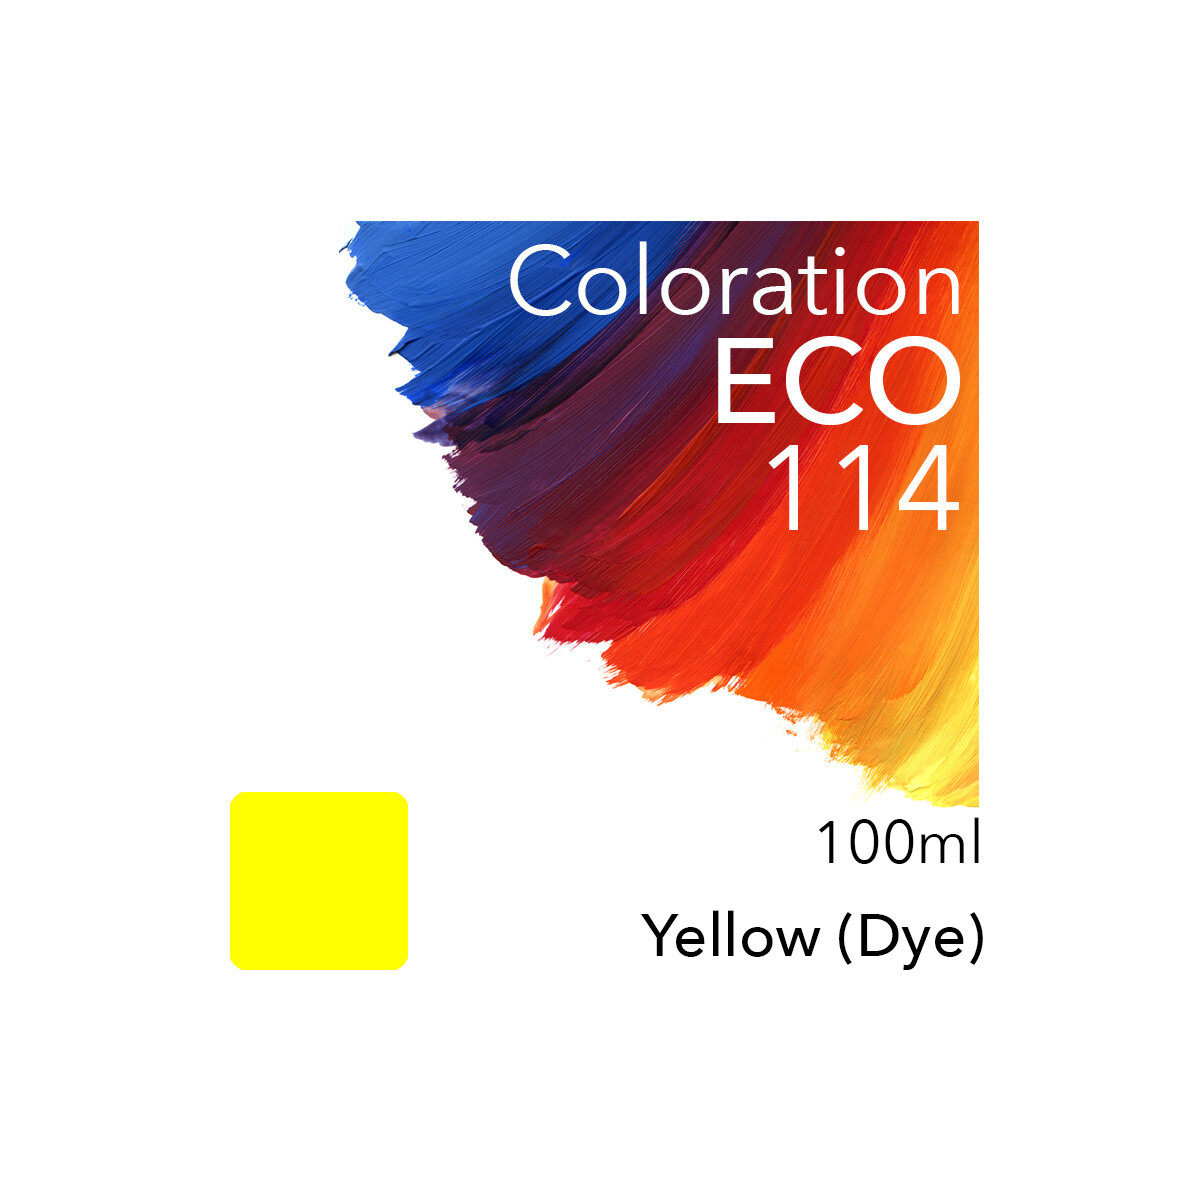 Coloration ECO kompatibel zu Epson 114 Y (Yellow) 100ml